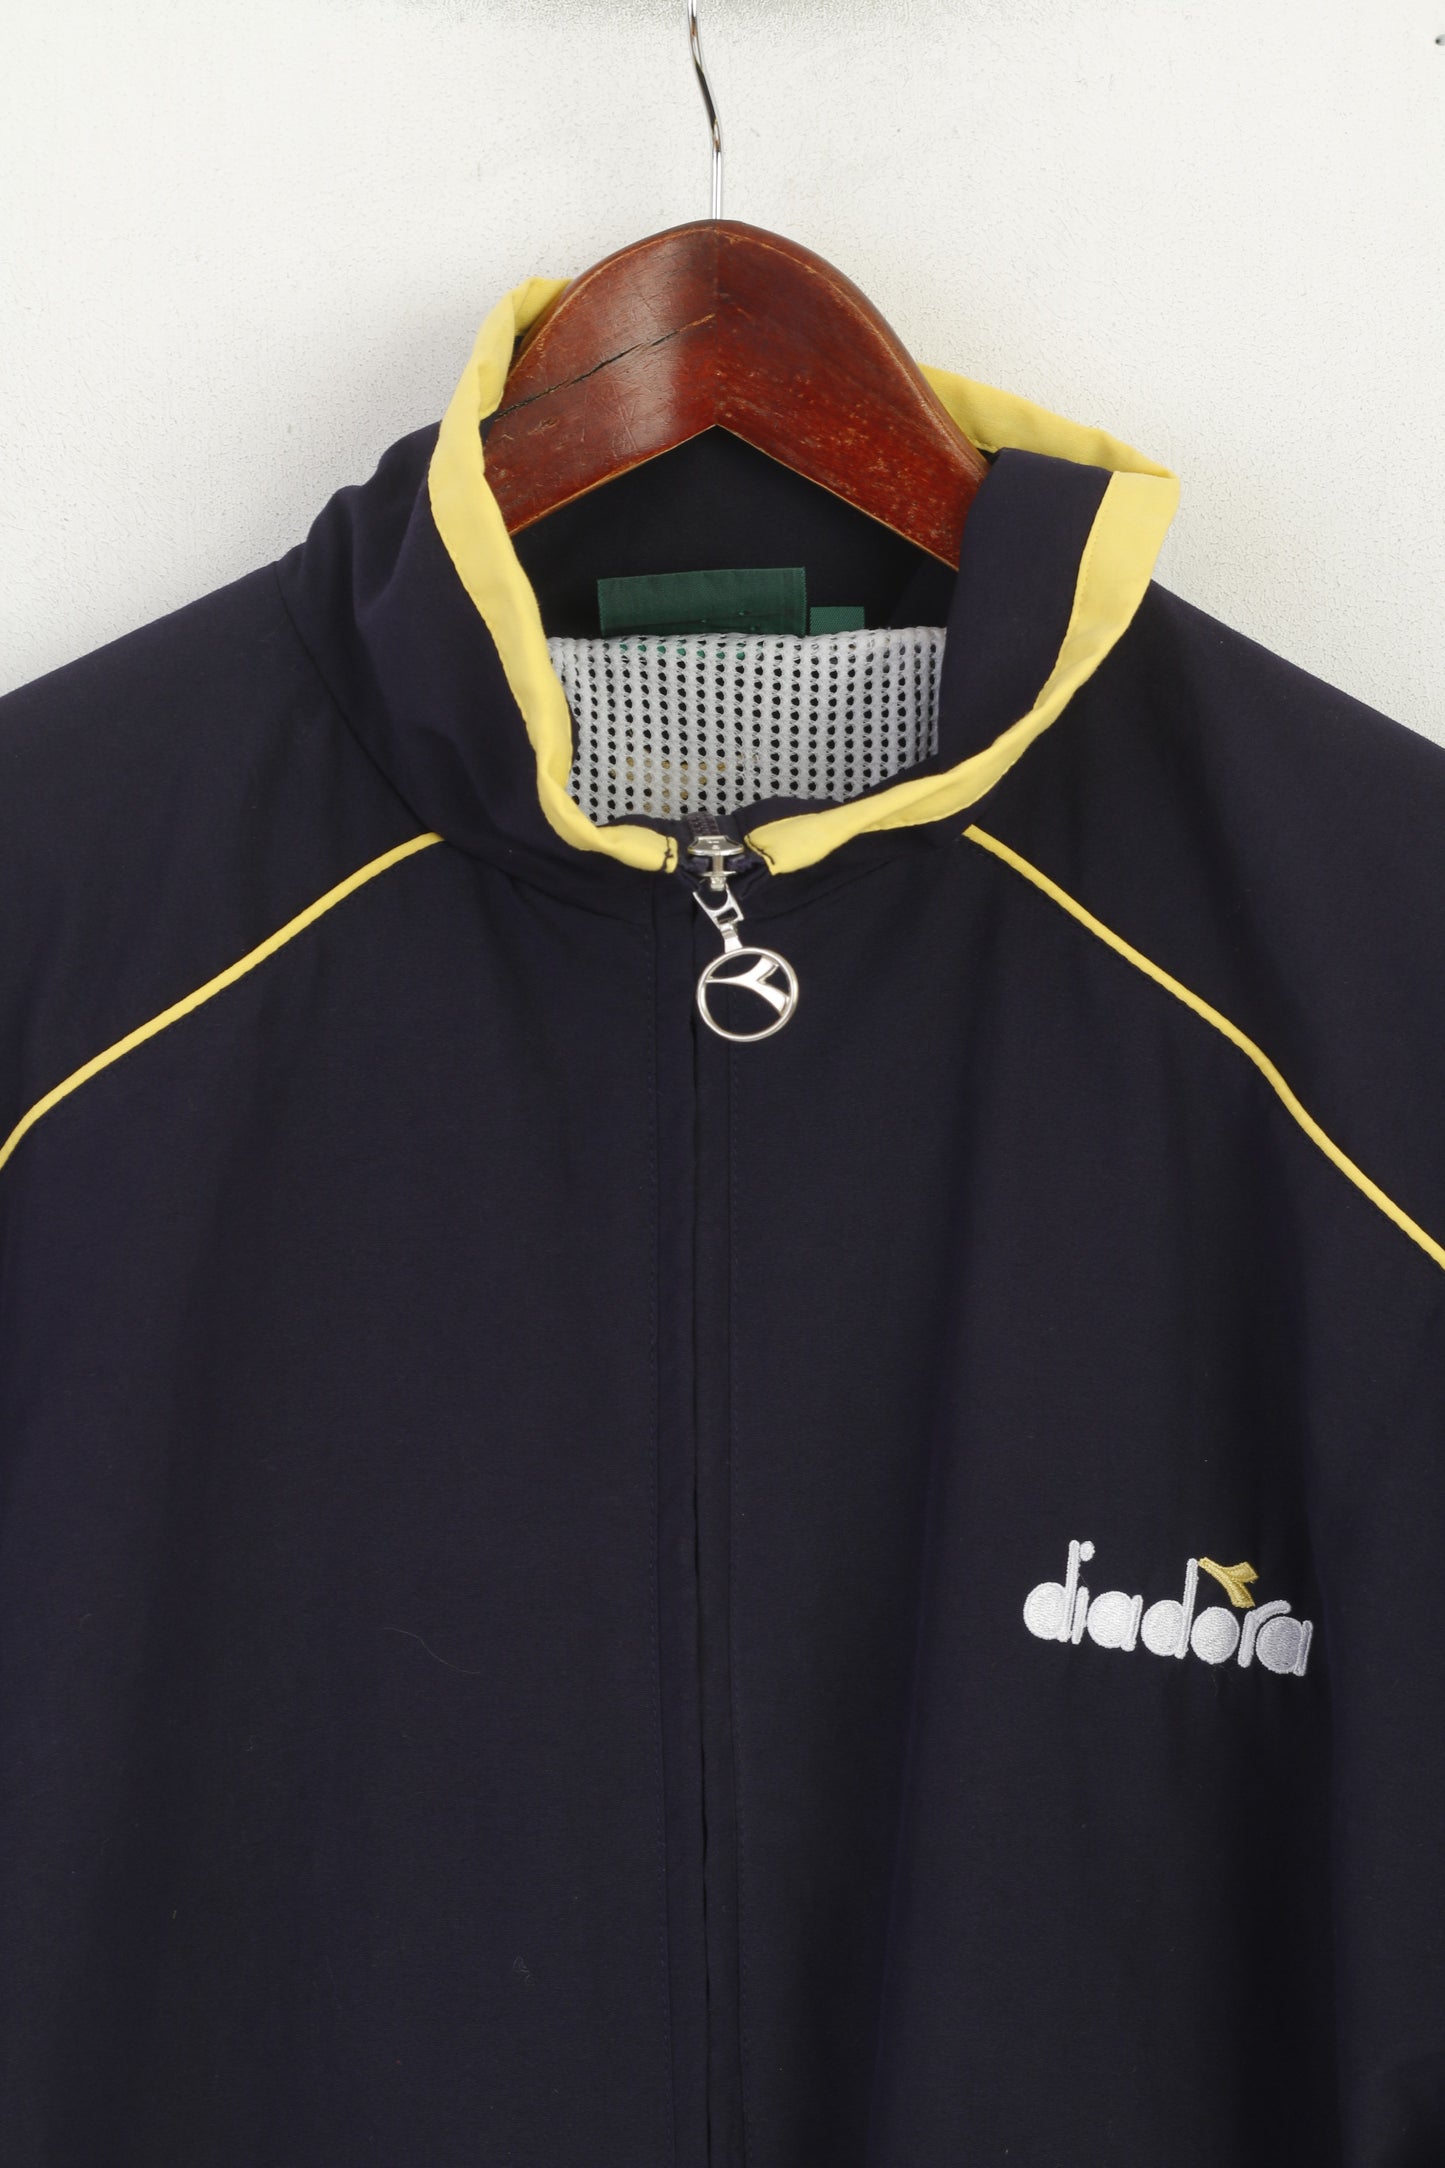 Diadora Men S Jacket Navy Bomber Vintrage Sportswear Zip Up Training Sport Track Top